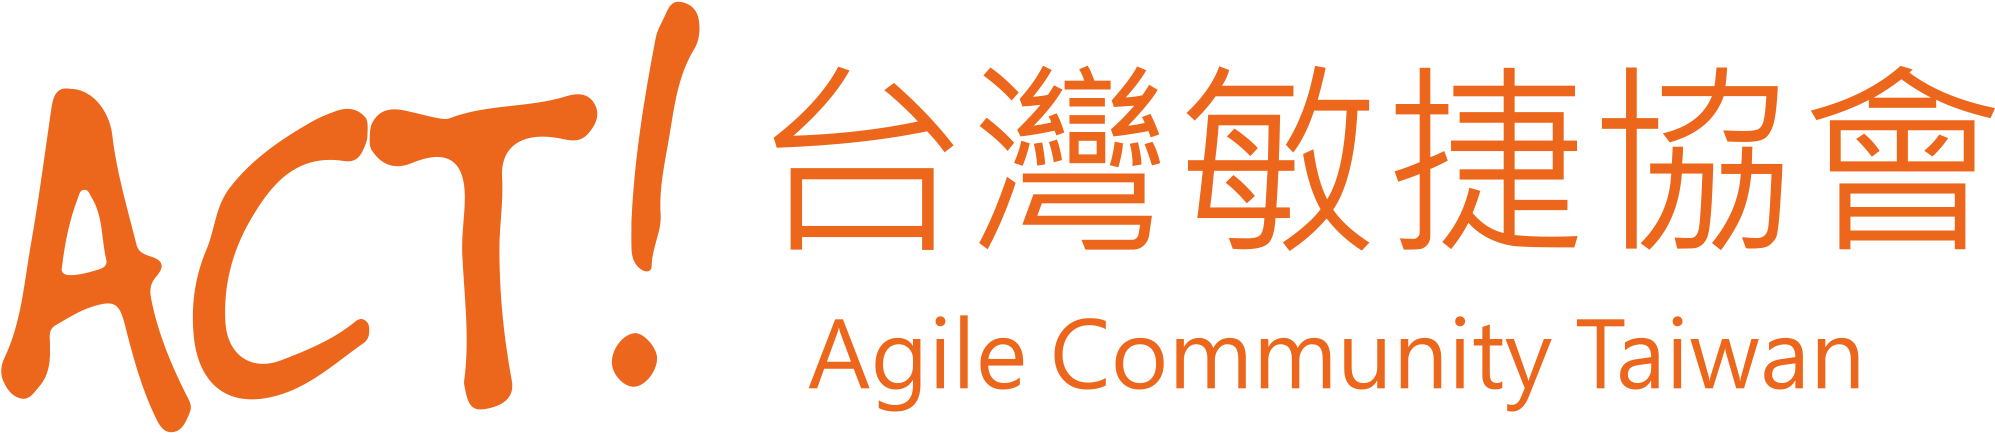 Agile Community Taiwan